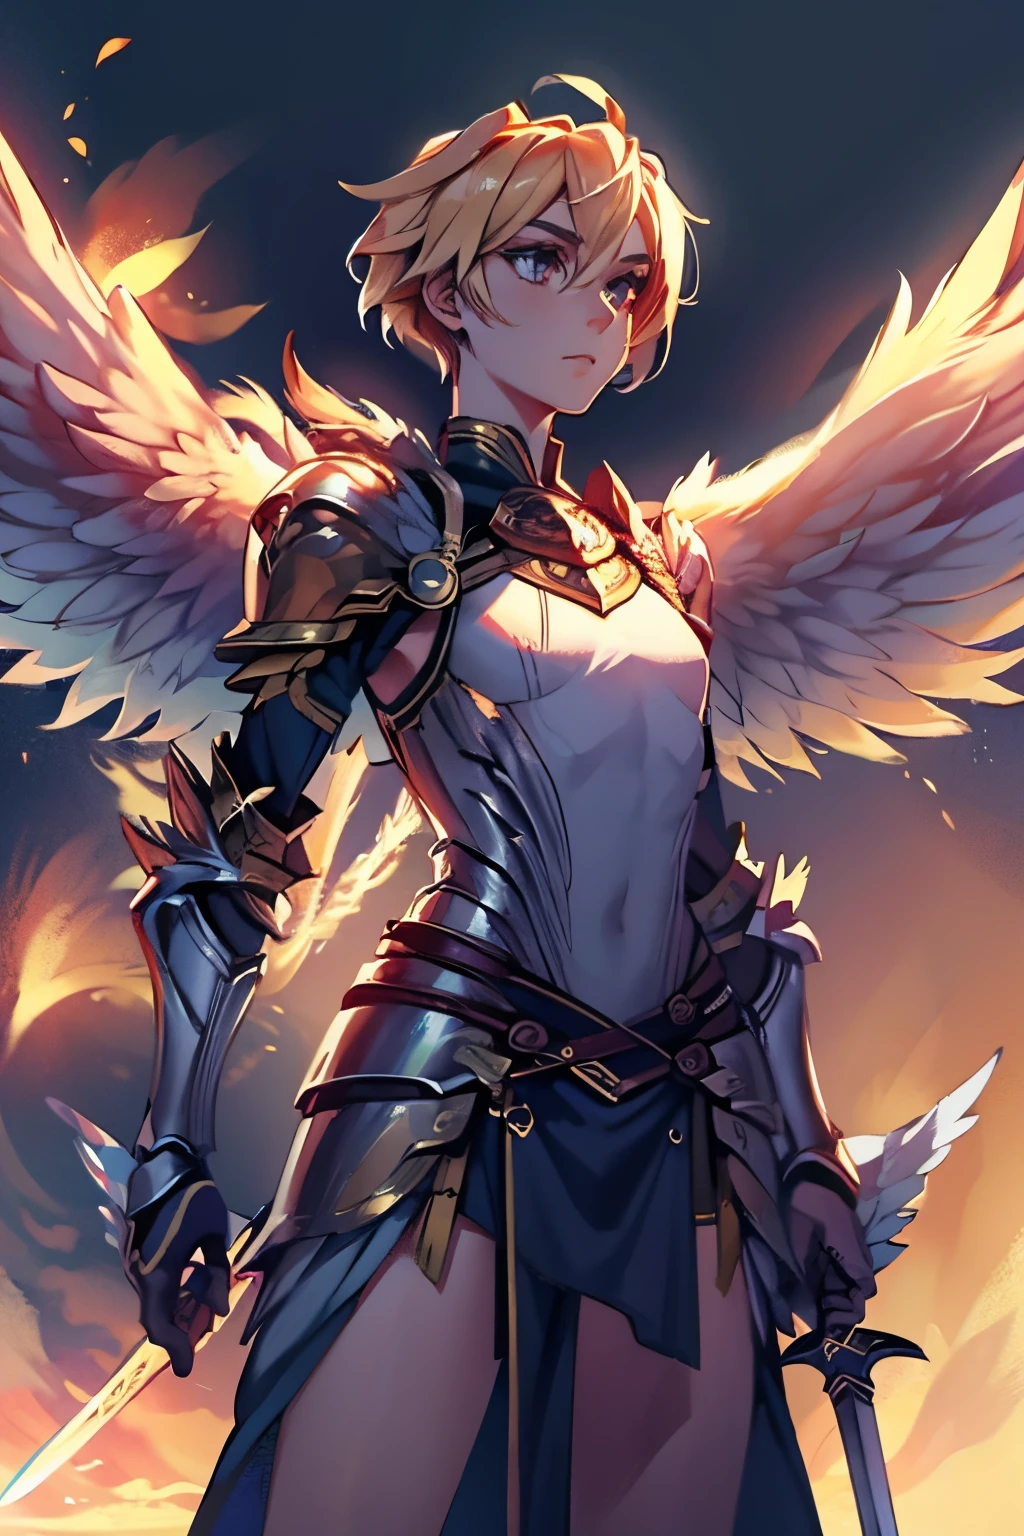 1 boy, Valkyrie, warrior, wielding a sword, wings, fire magic, wearing armor, flat chest, androgynous, wielding a shield